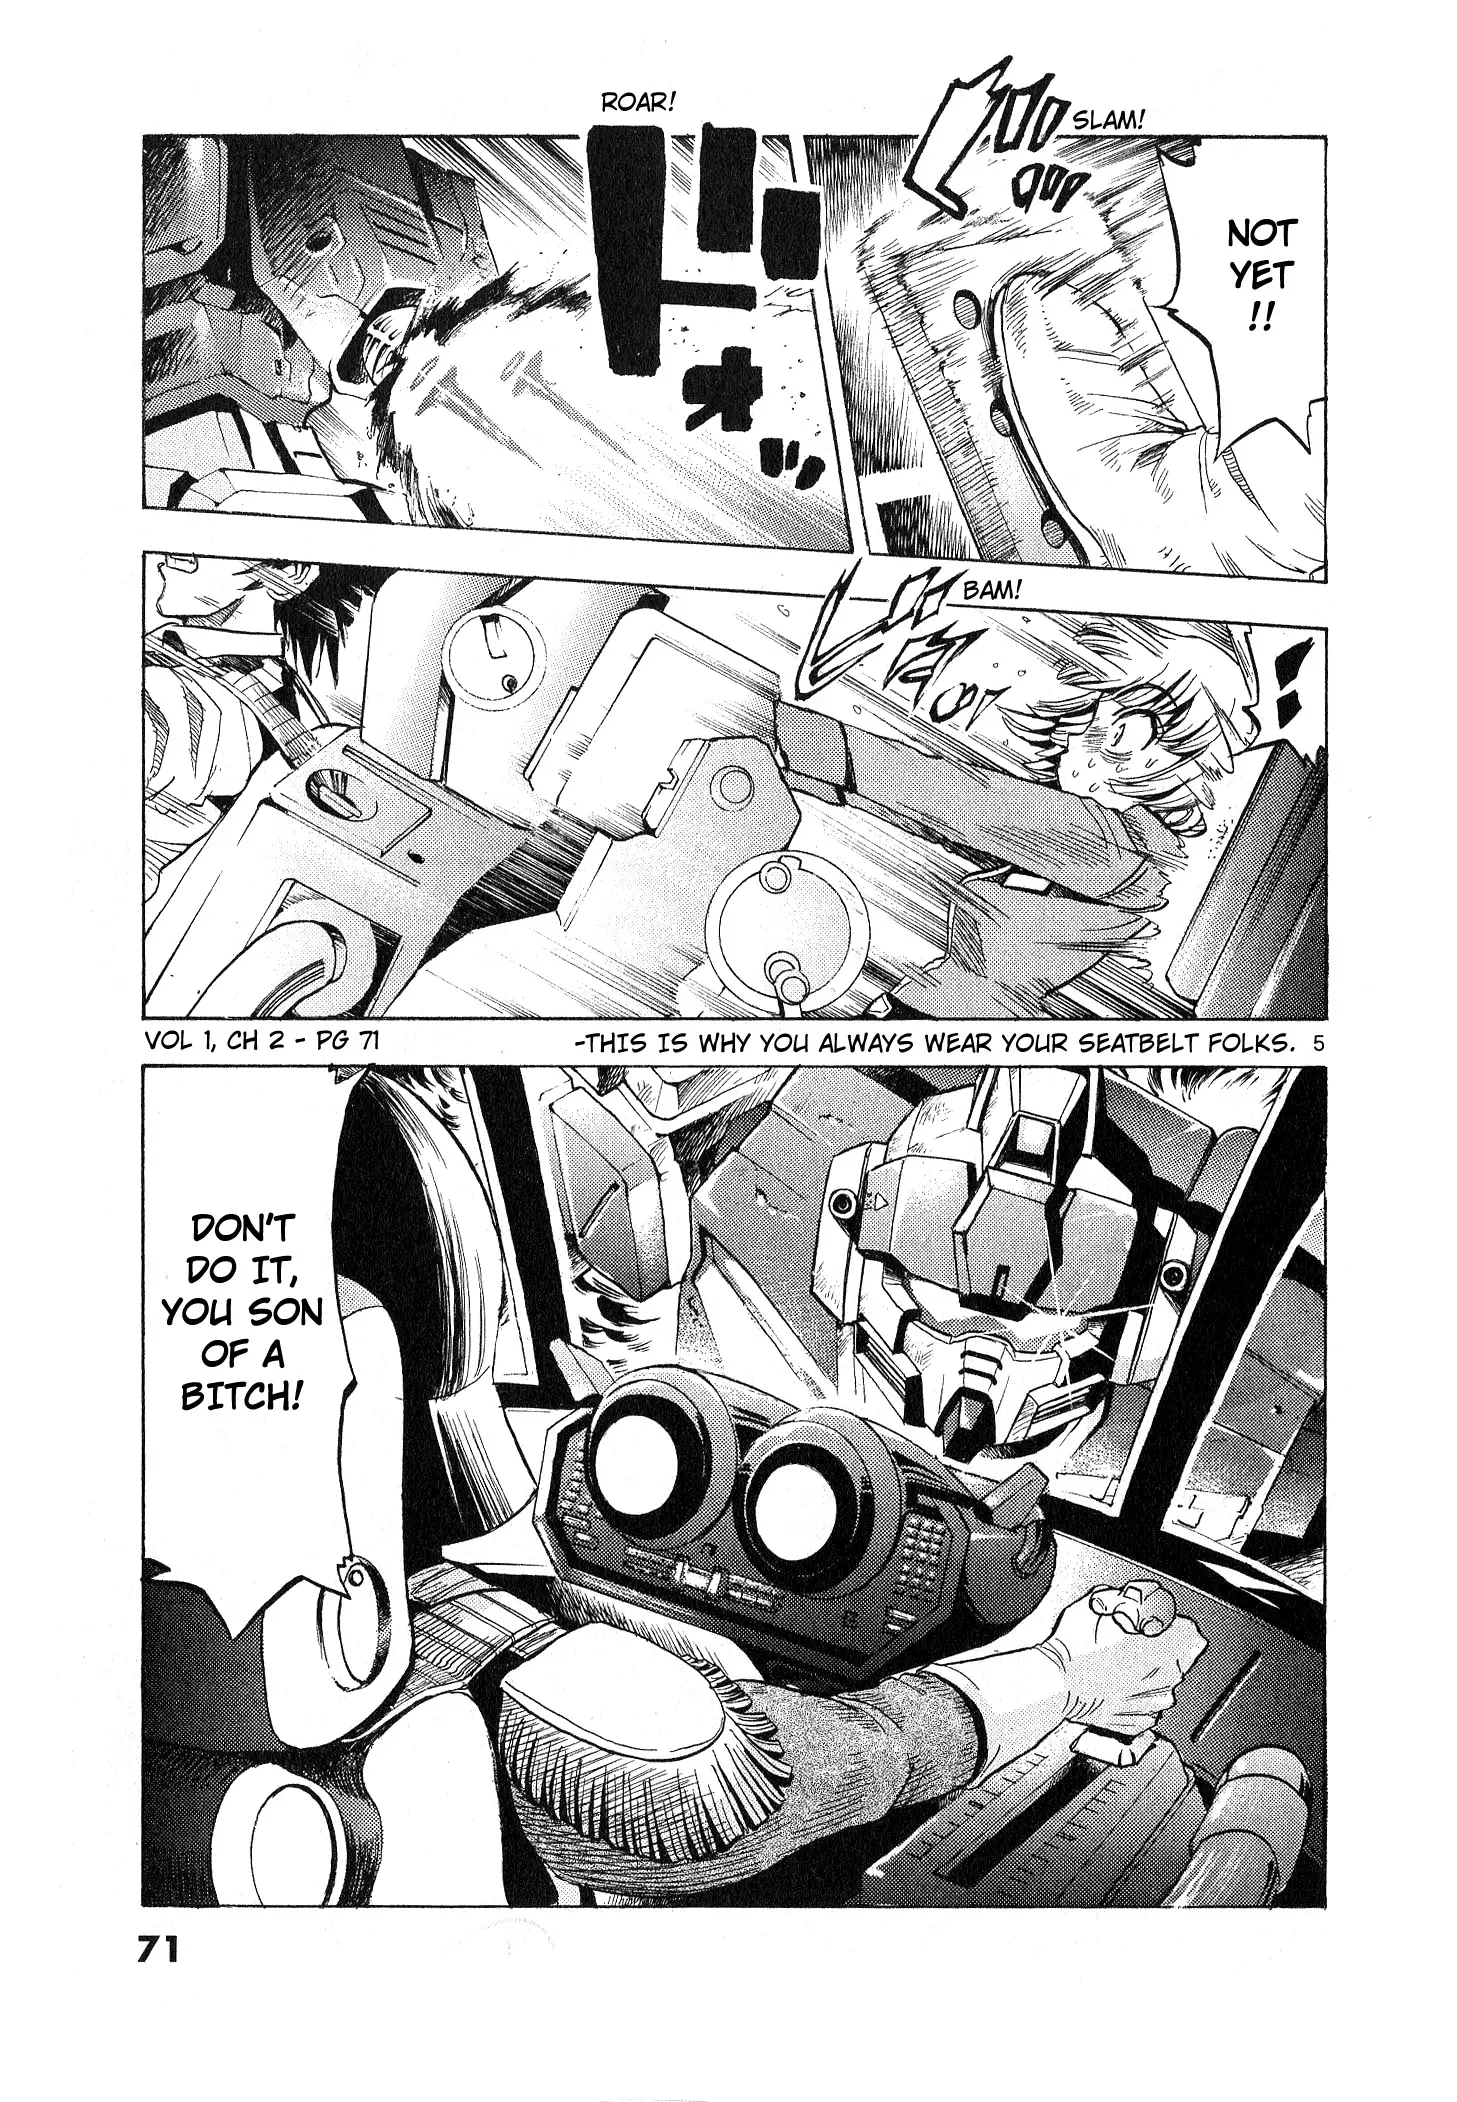 Mobile Suit Gundam Aggressor - 2 page 5-78659f86